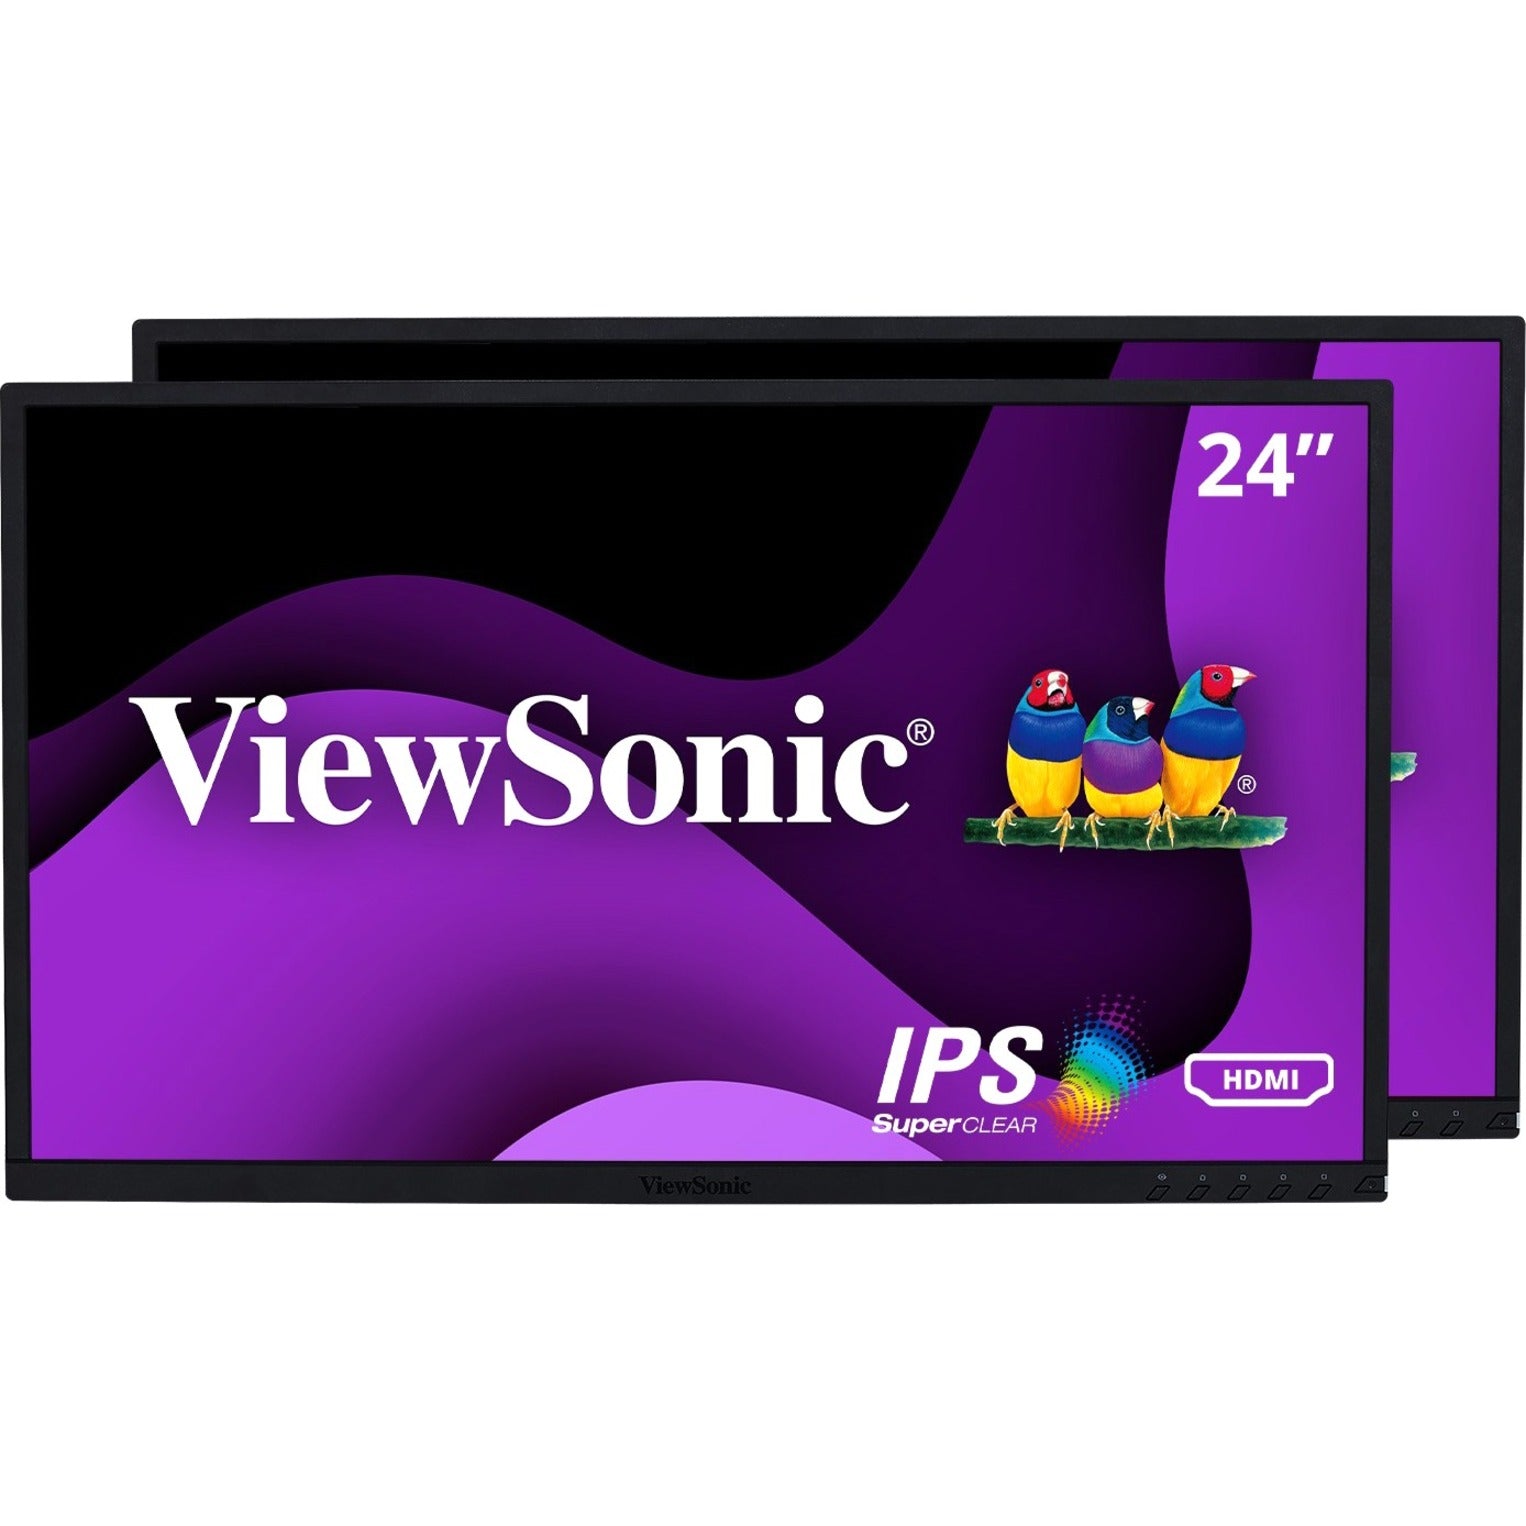 ViewSonic VG2448_H2 24 Dual Monitors with Full HD IPS Panel, USB Hub, 1920x1080 Resolution